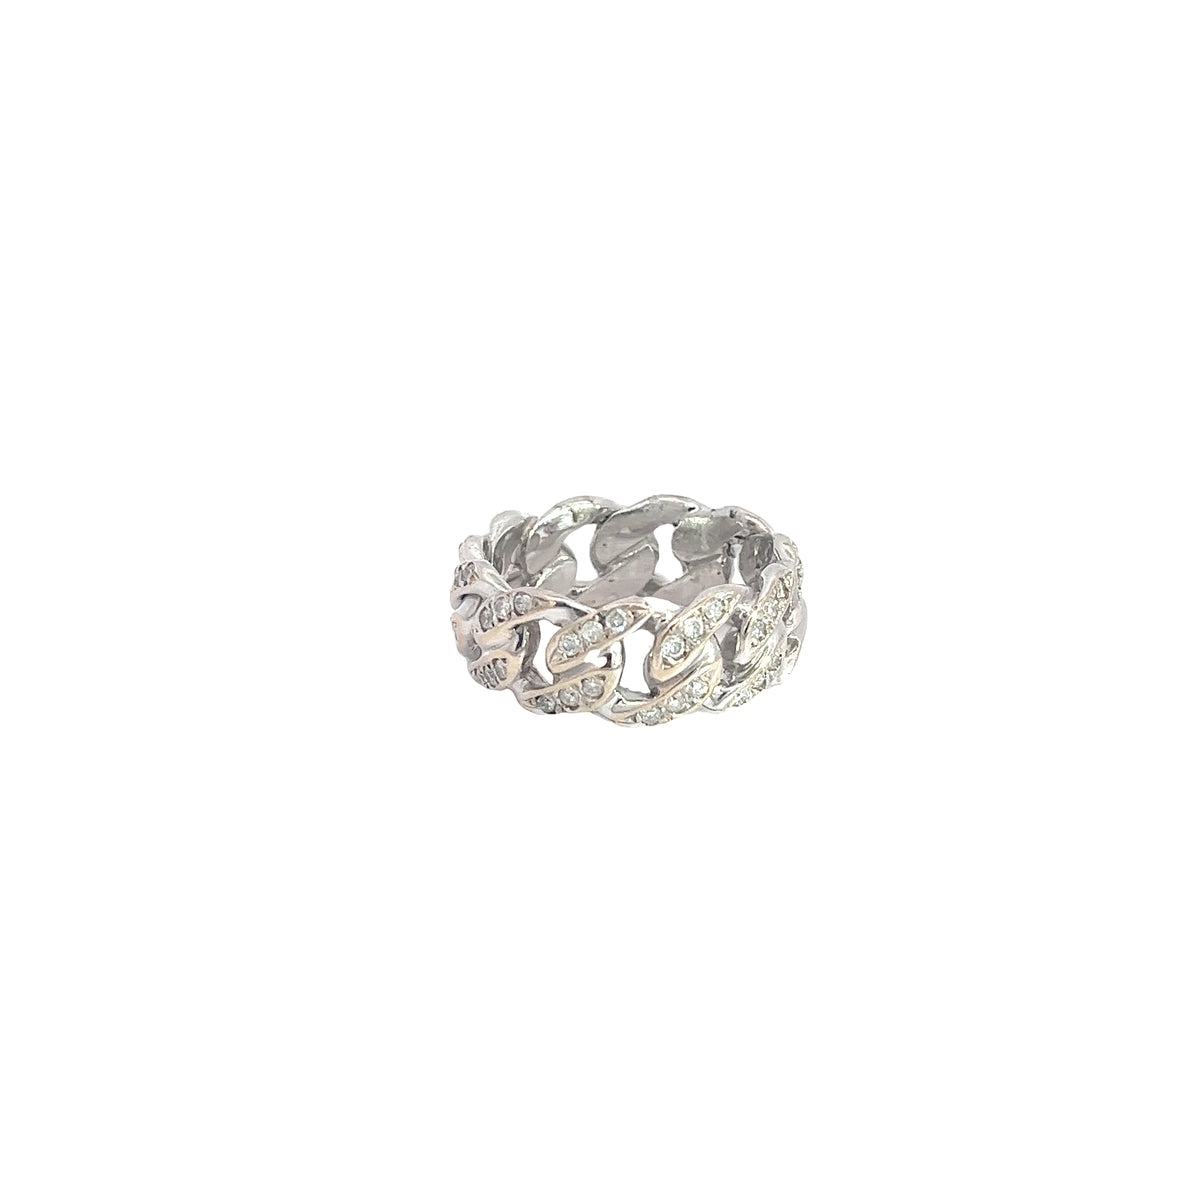 Mens 14k white gold Diamond Cuban link ring